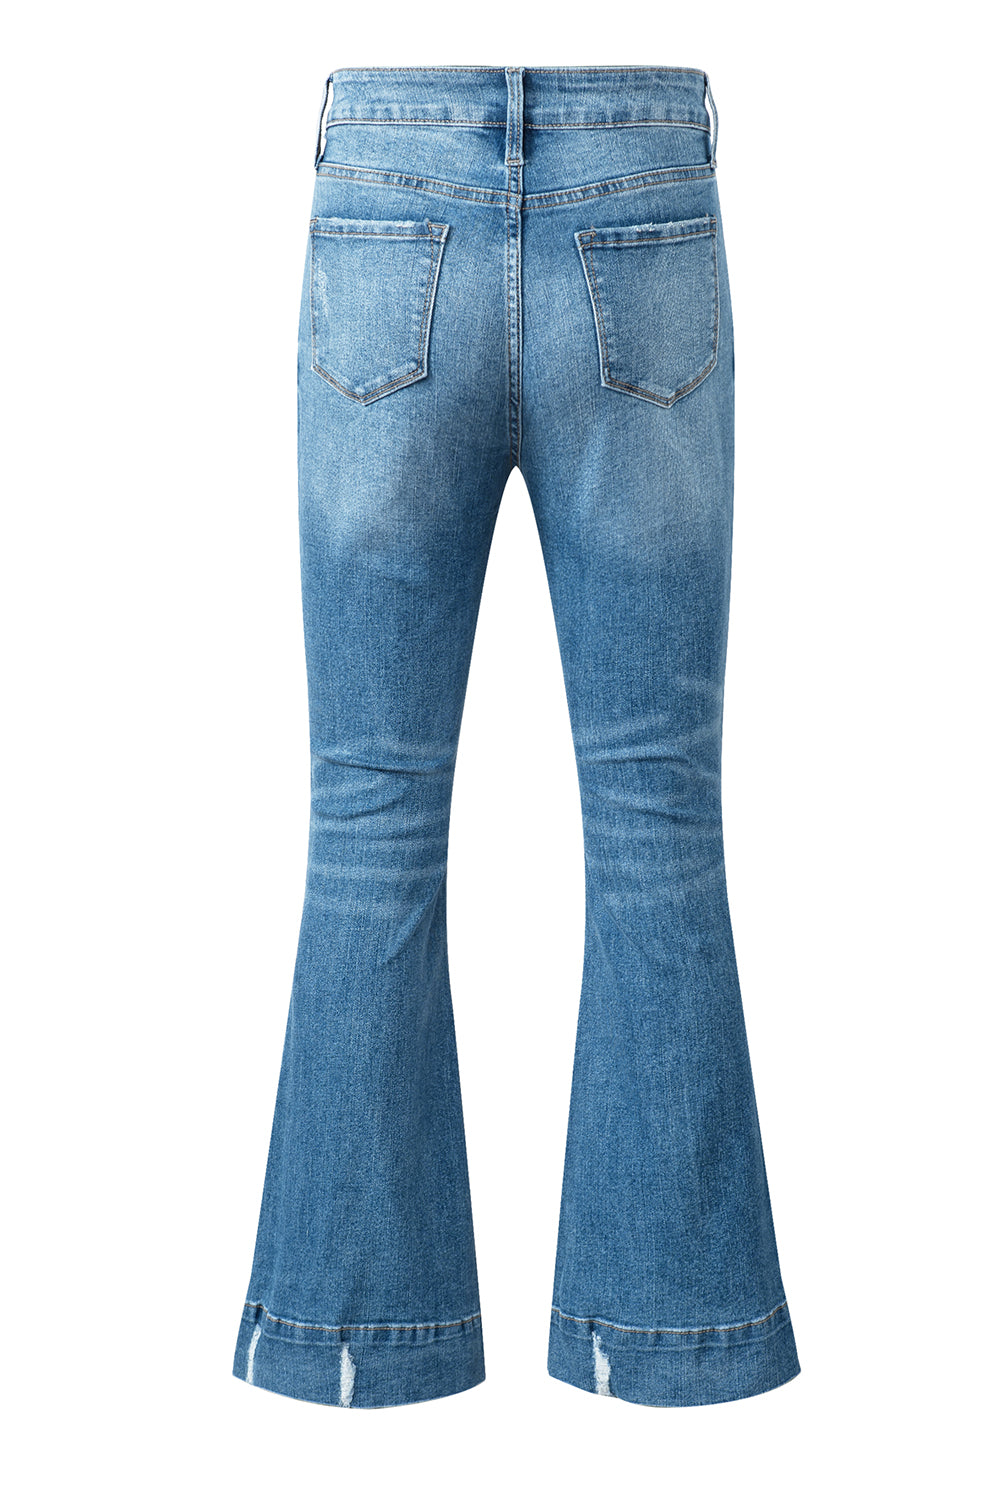 Sky Blue Slight Distressed Medium Wash Flare Jeans - FZwear